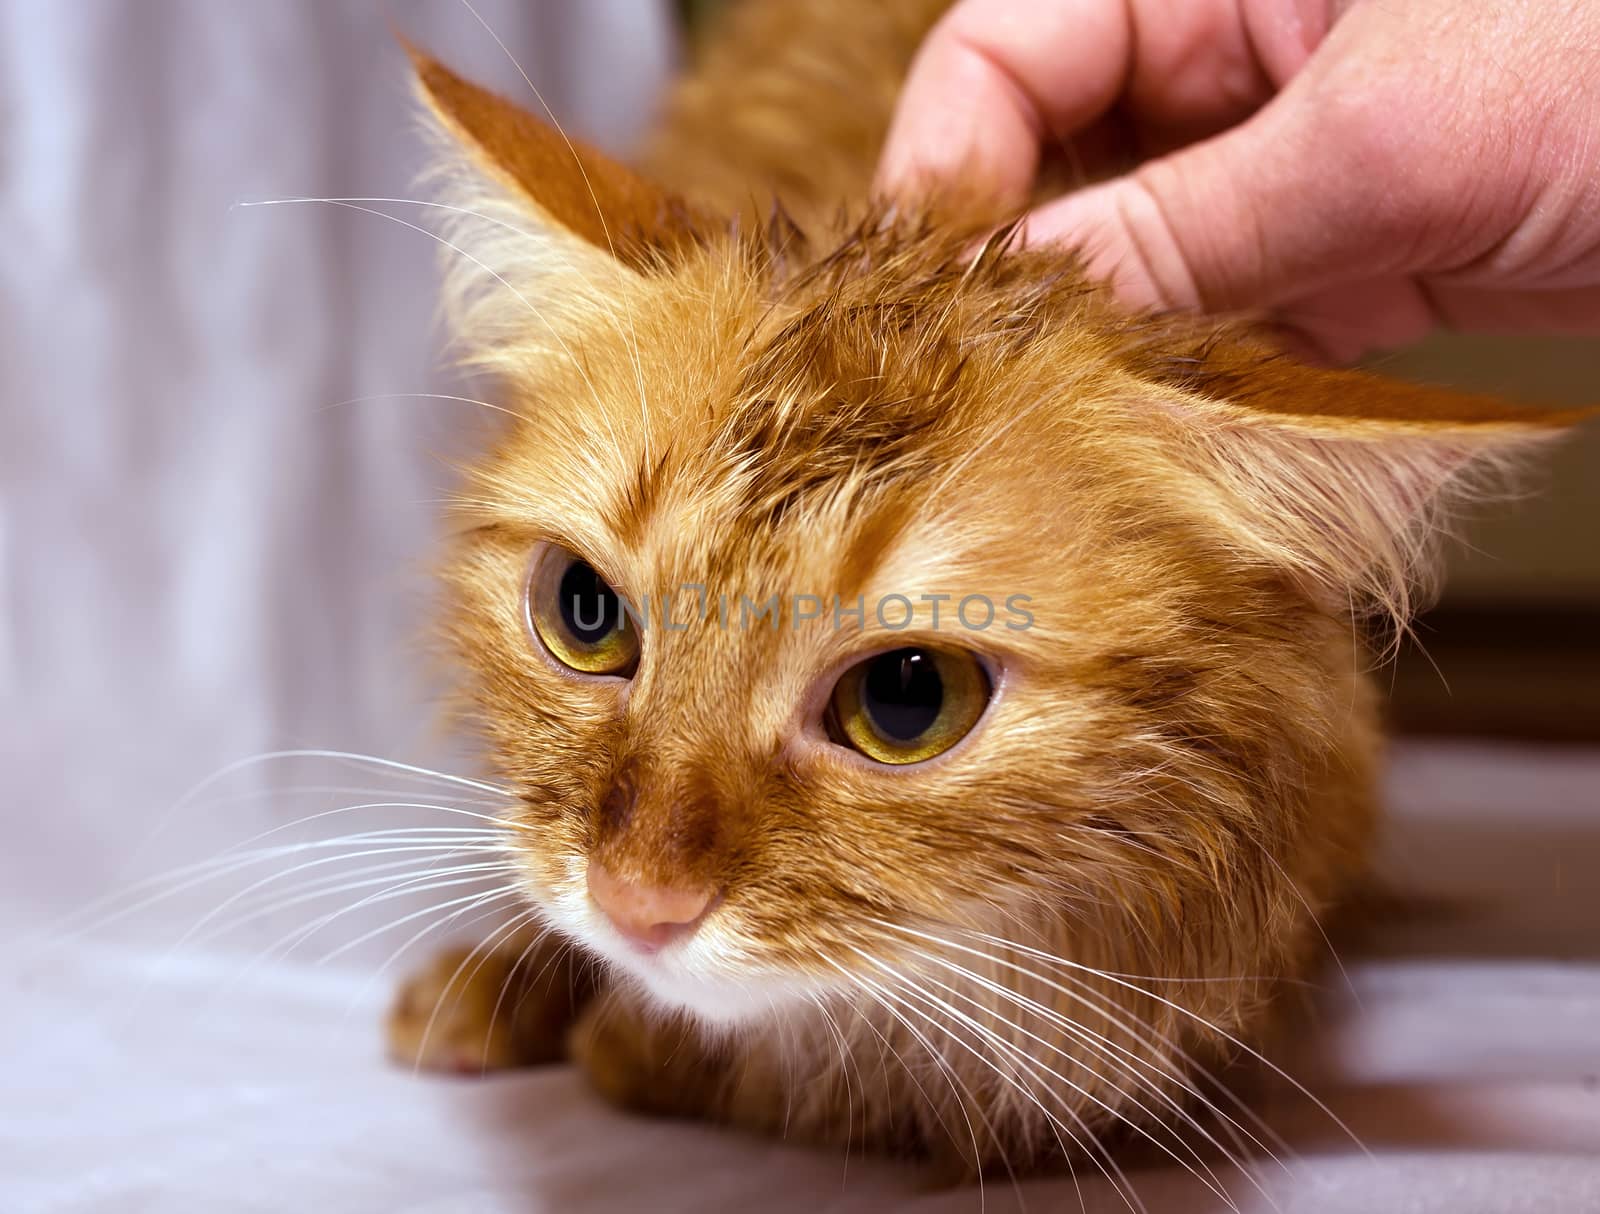 The muzzle pet - red wet cat closeup